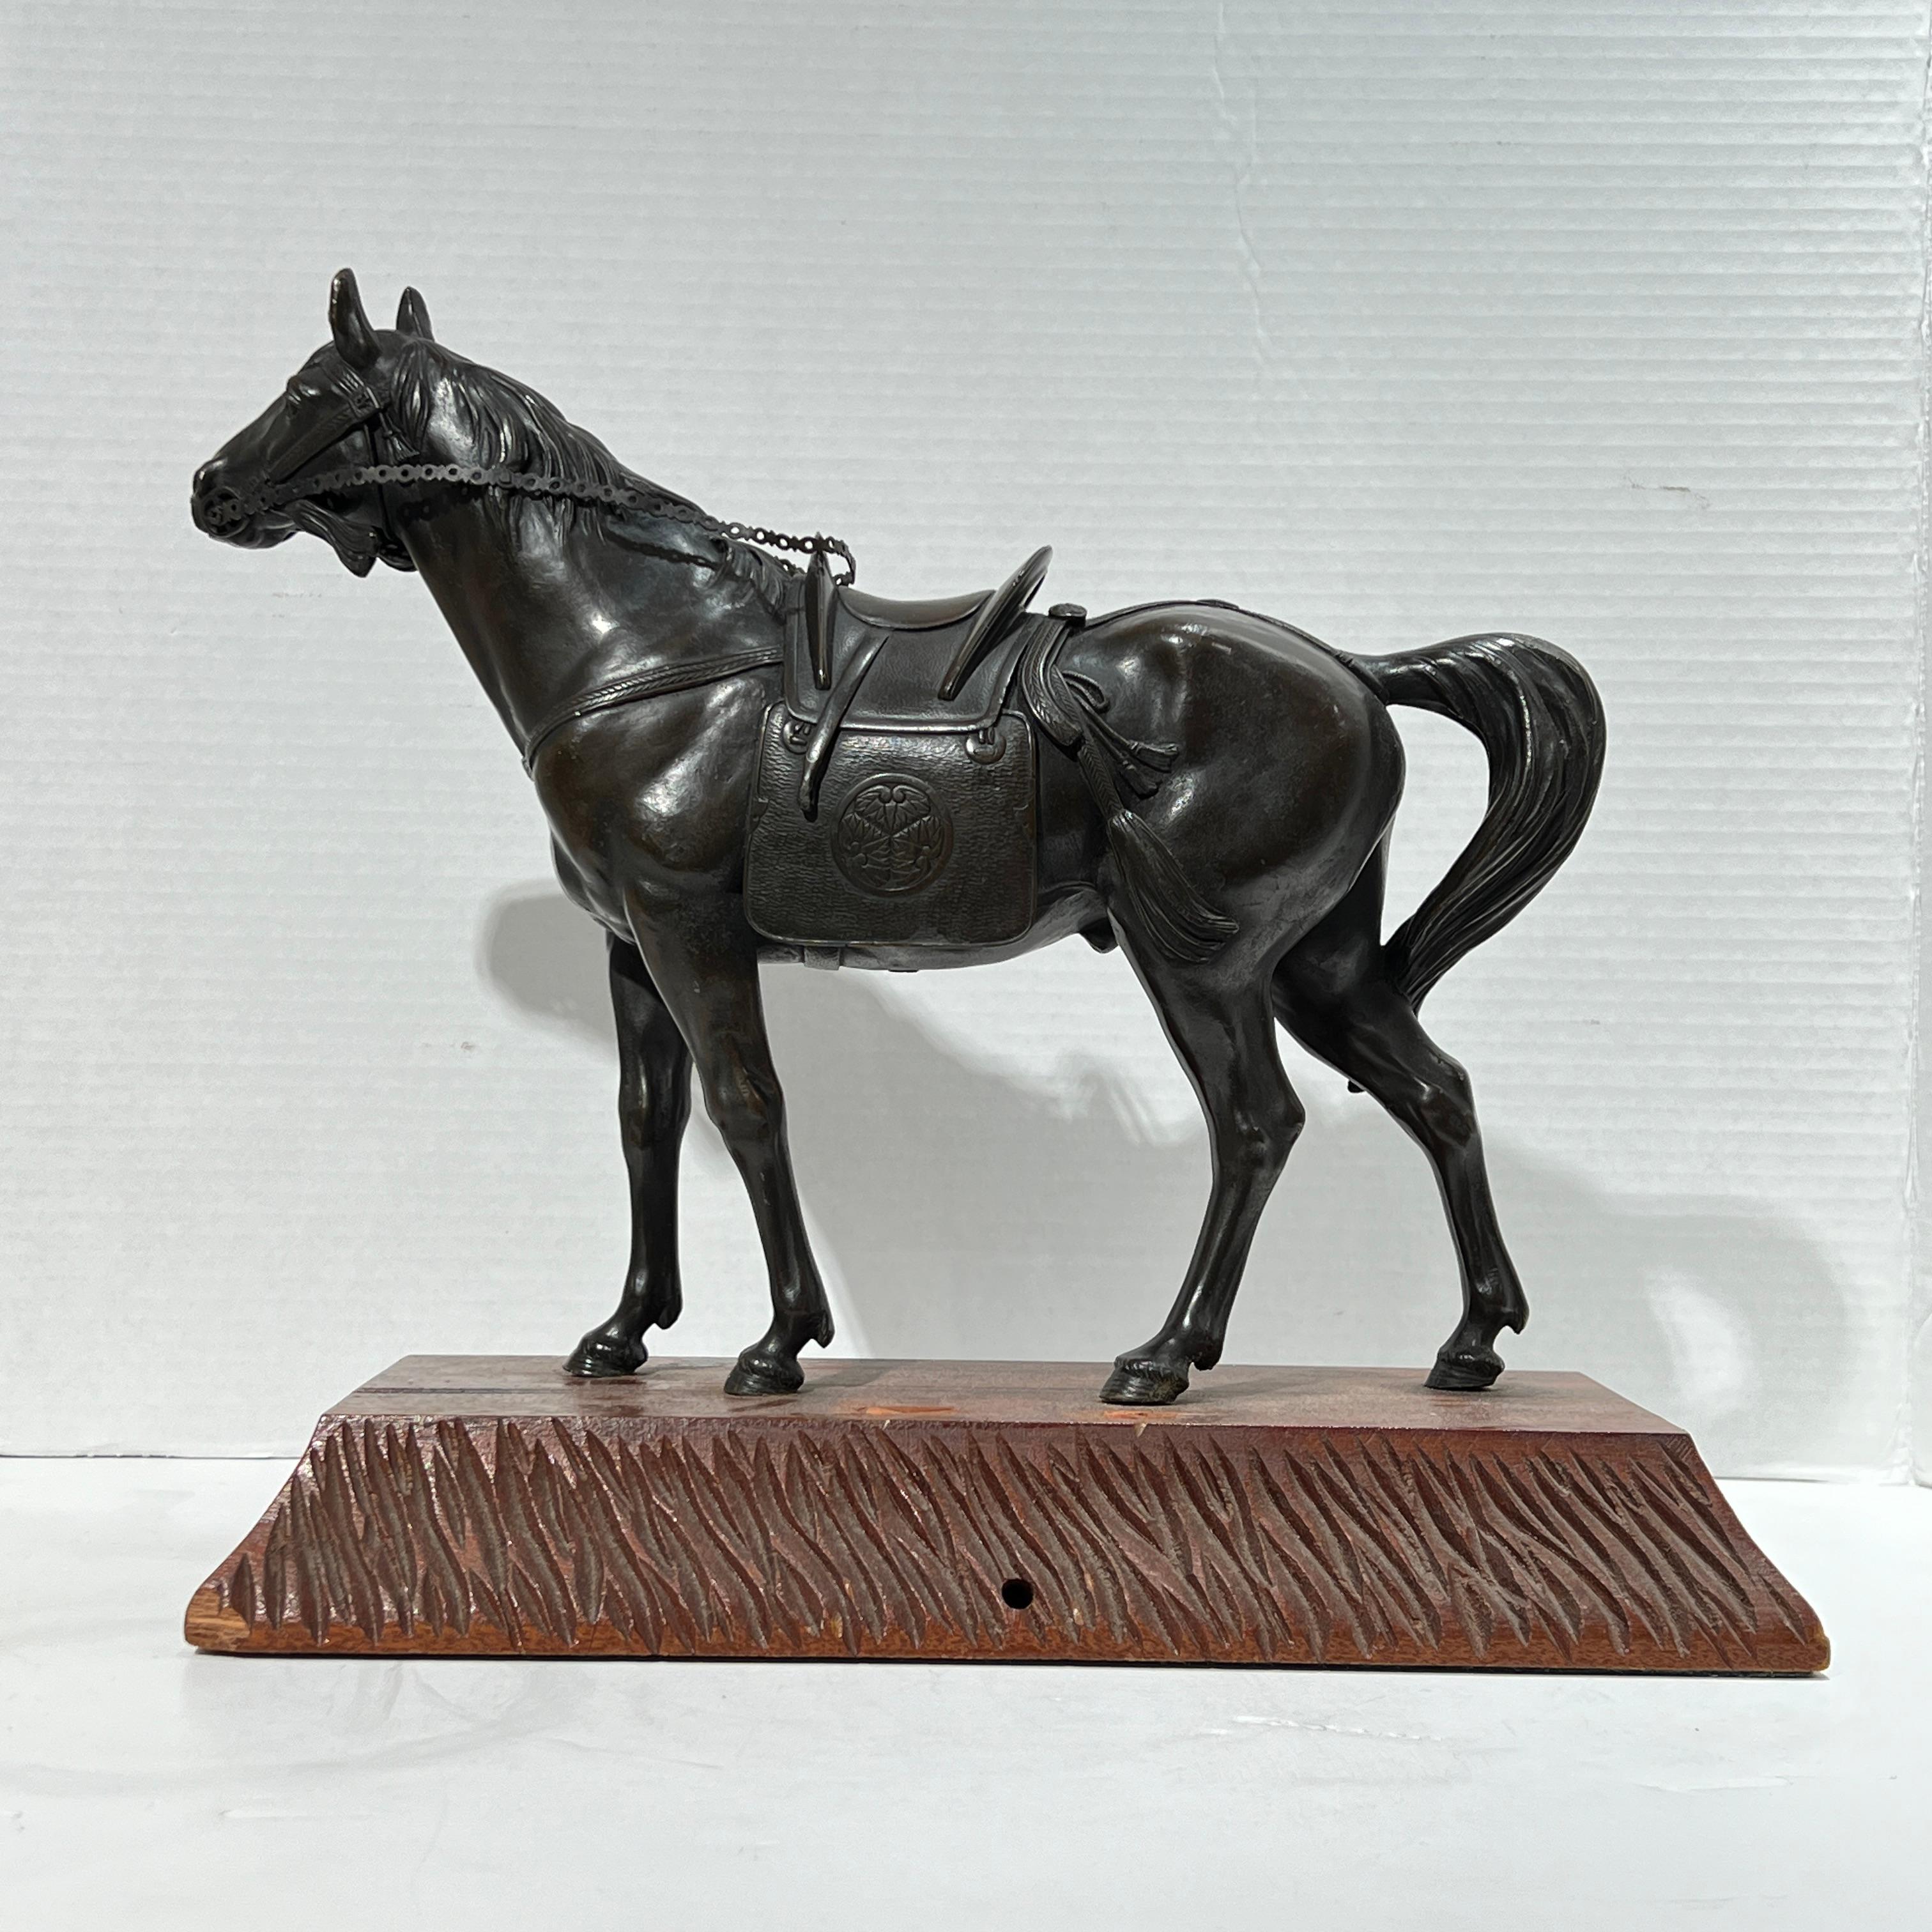 19th Century Japanese Bronze Horse Sculpture For Sale 5